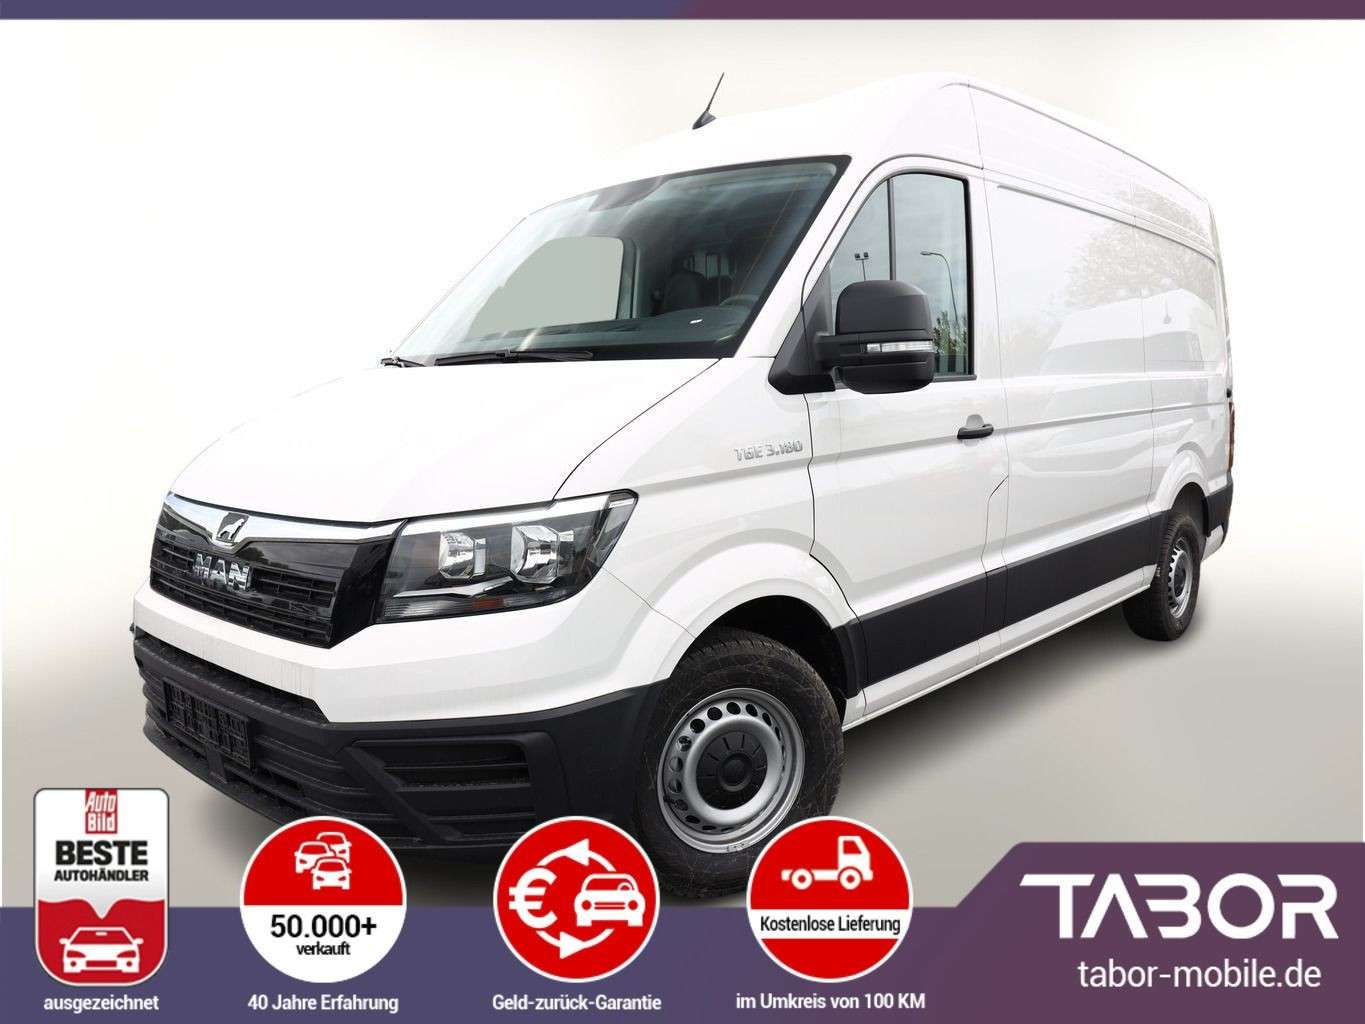 MAN TGE Van in White used in Darmstadt for € 44,288.-